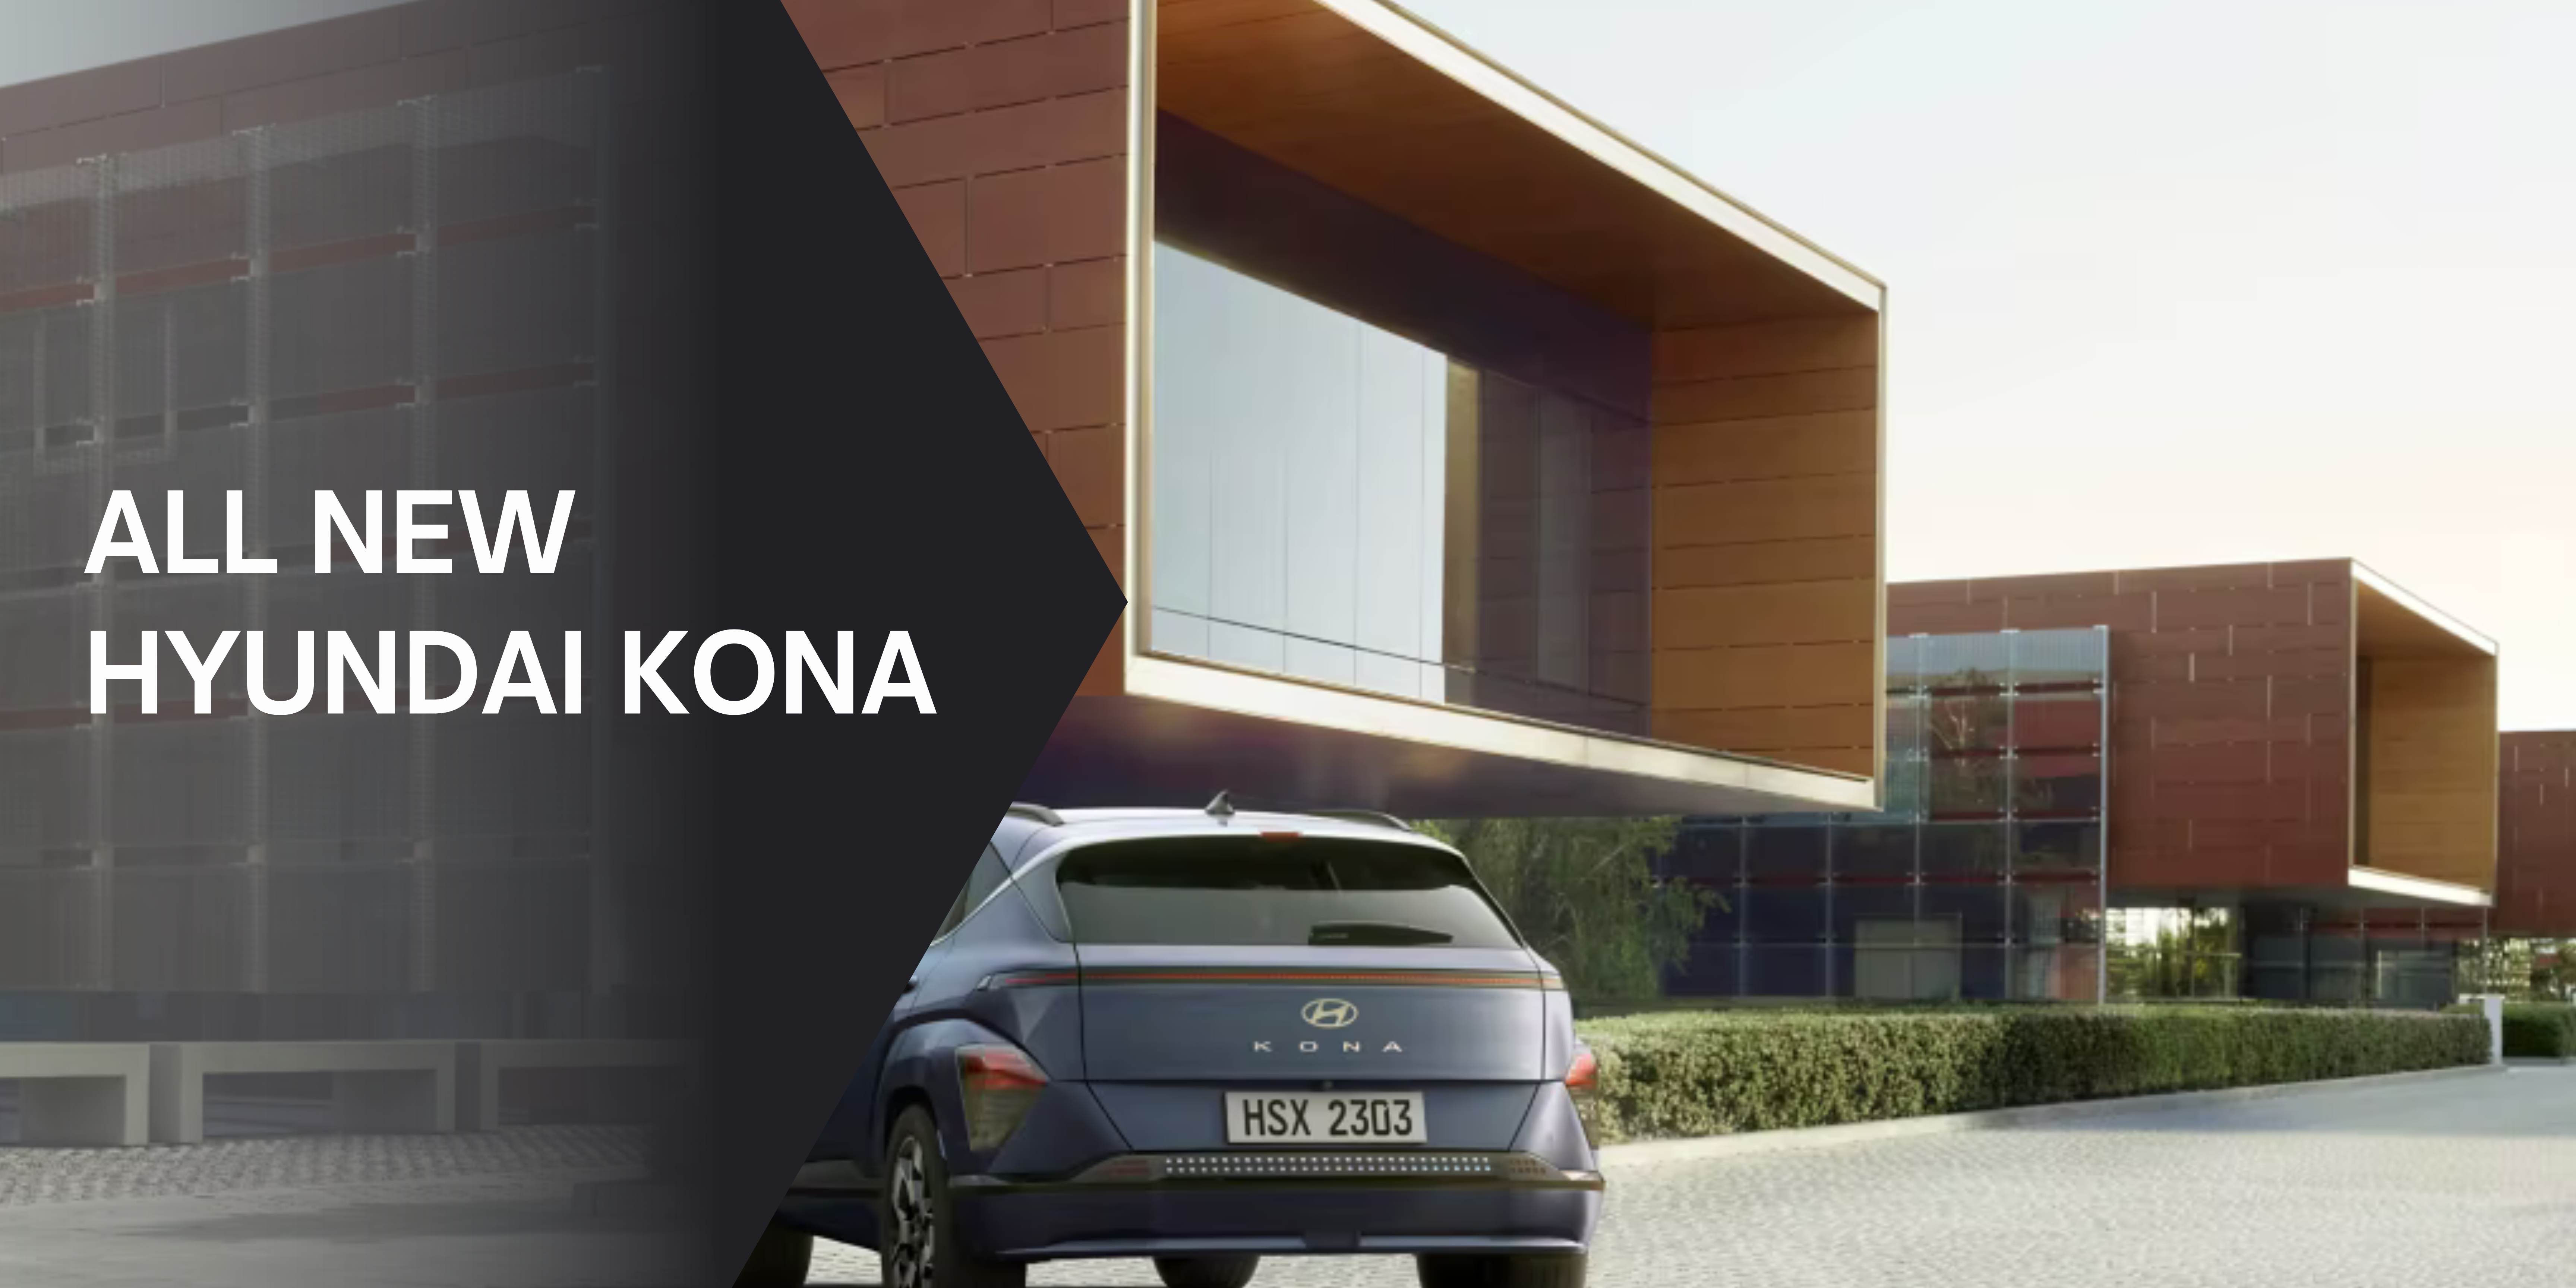 Discover the All New Hyundai Kona